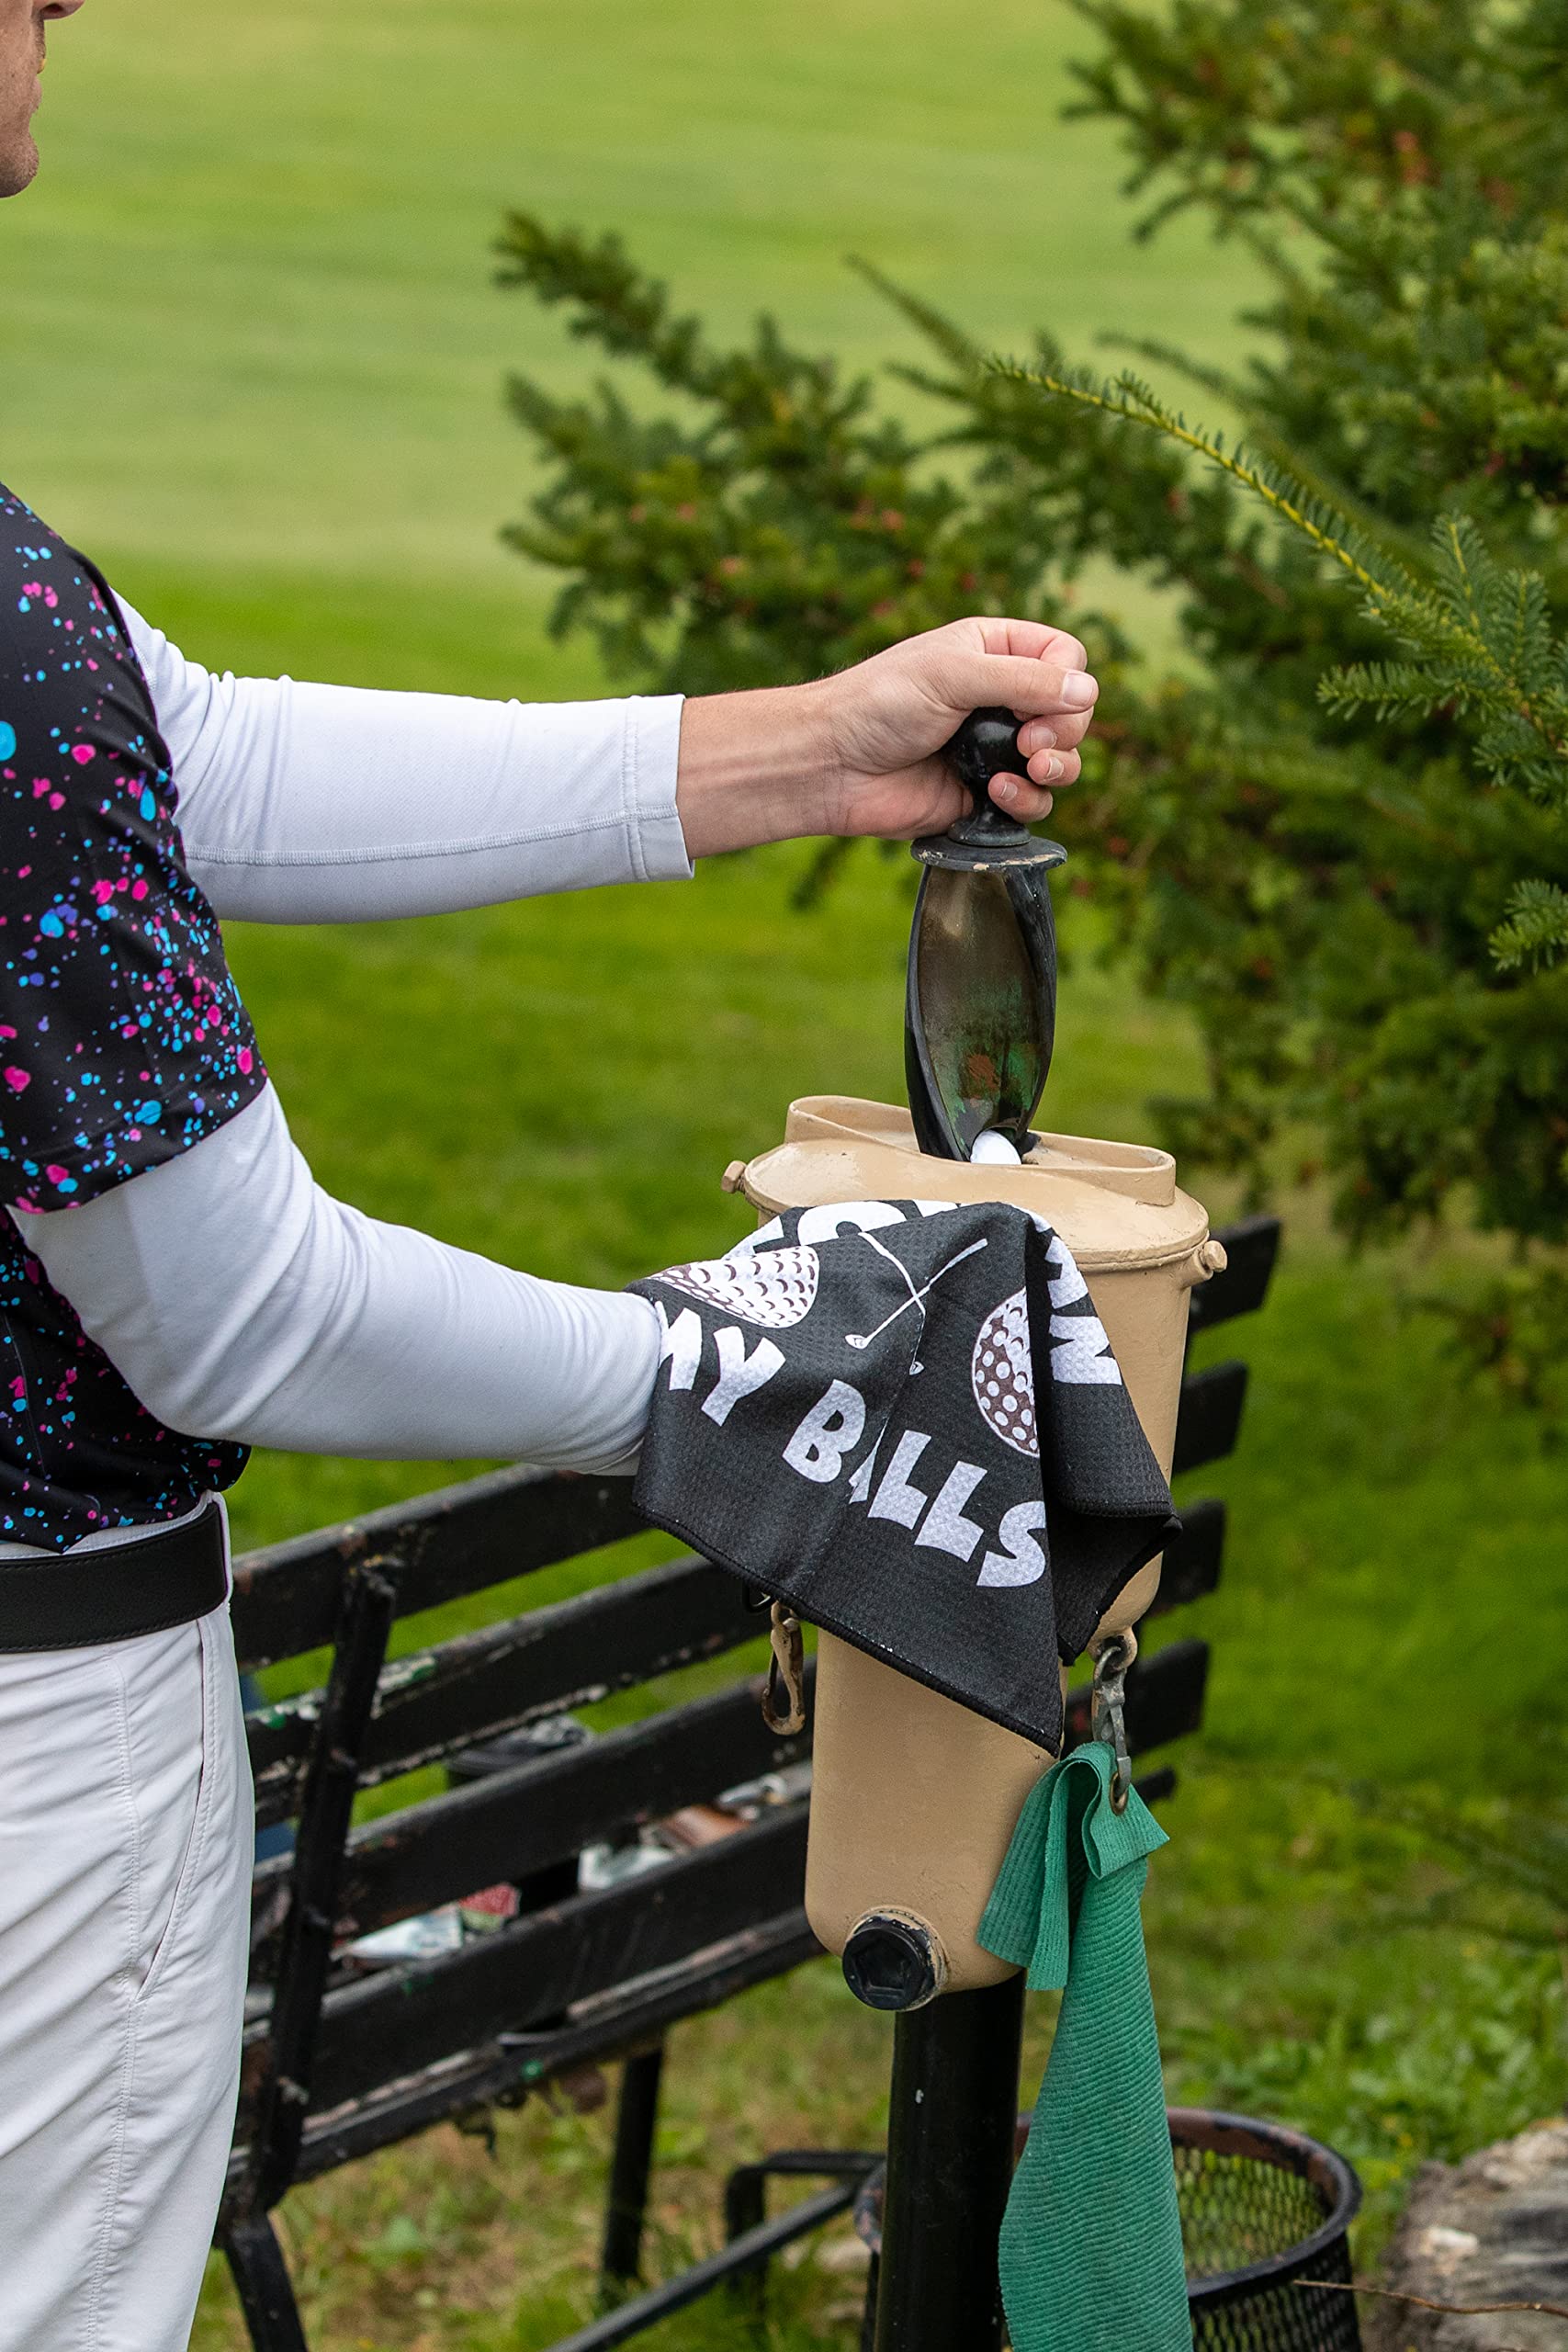 Does The Golf Bag Brand Matter? (Bag Brand Matching the Club Brand)